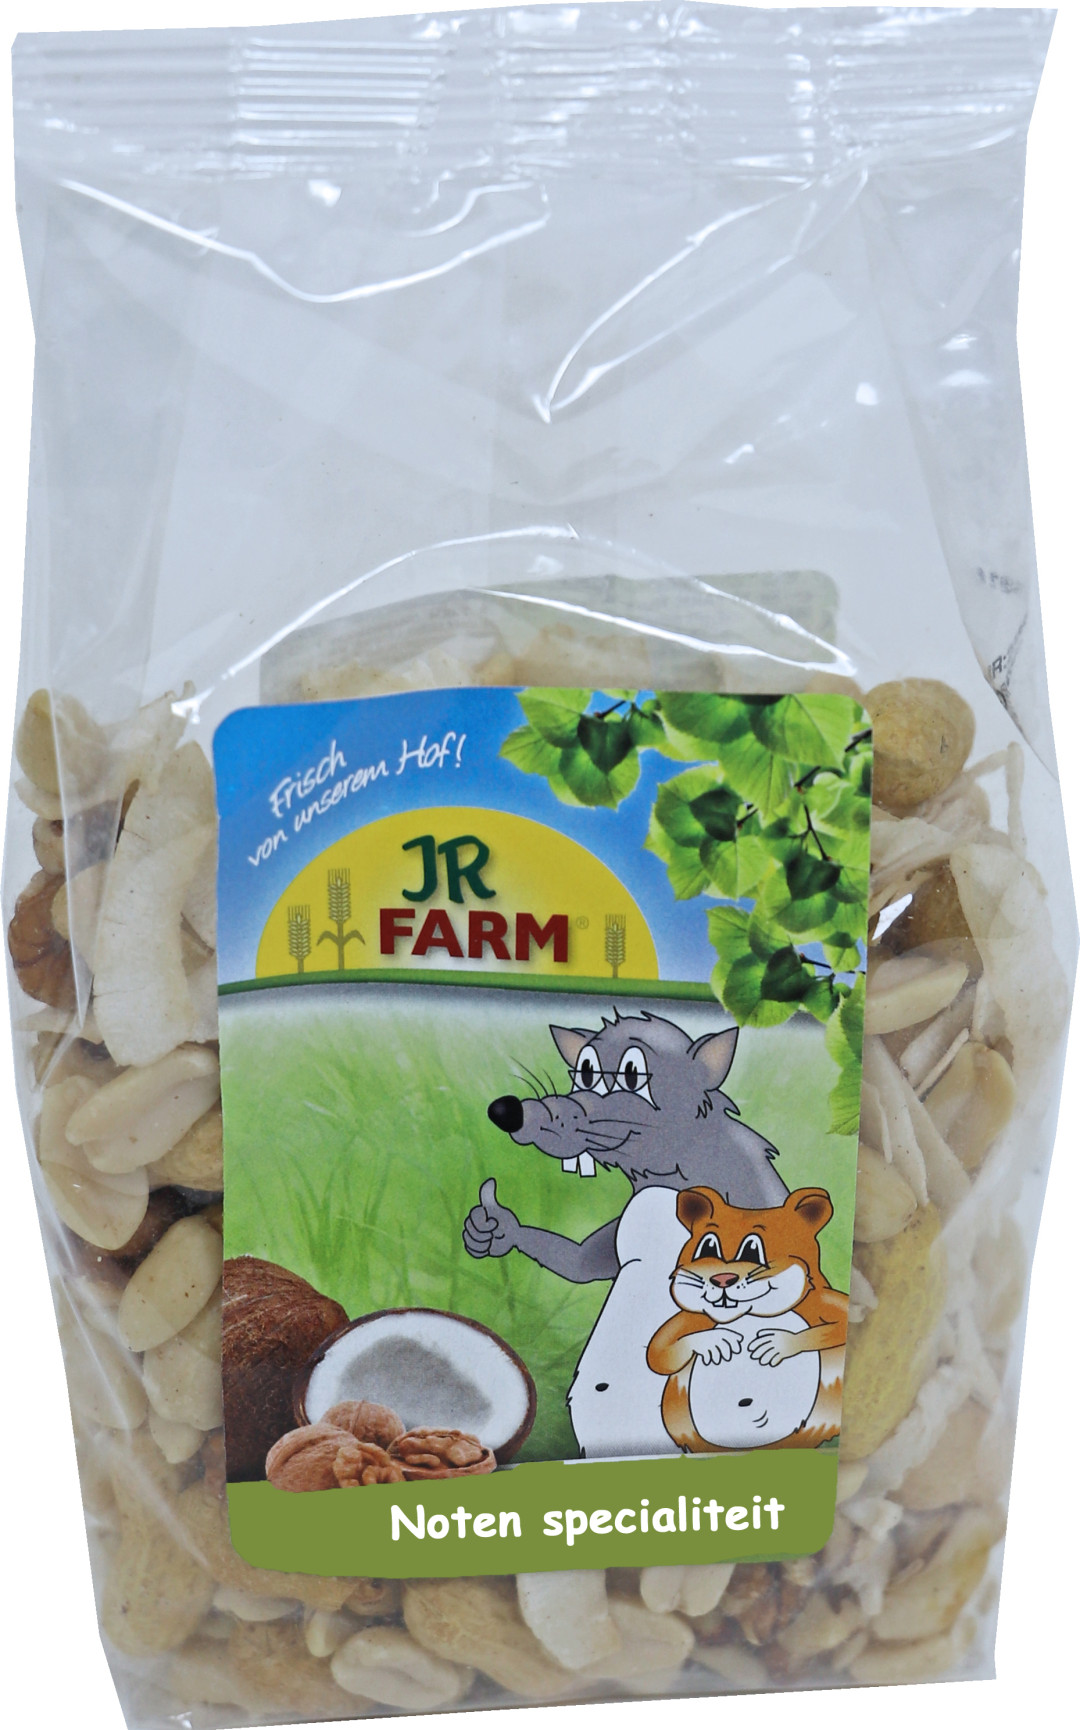 JR Farm notenspecialiteit 200 gr